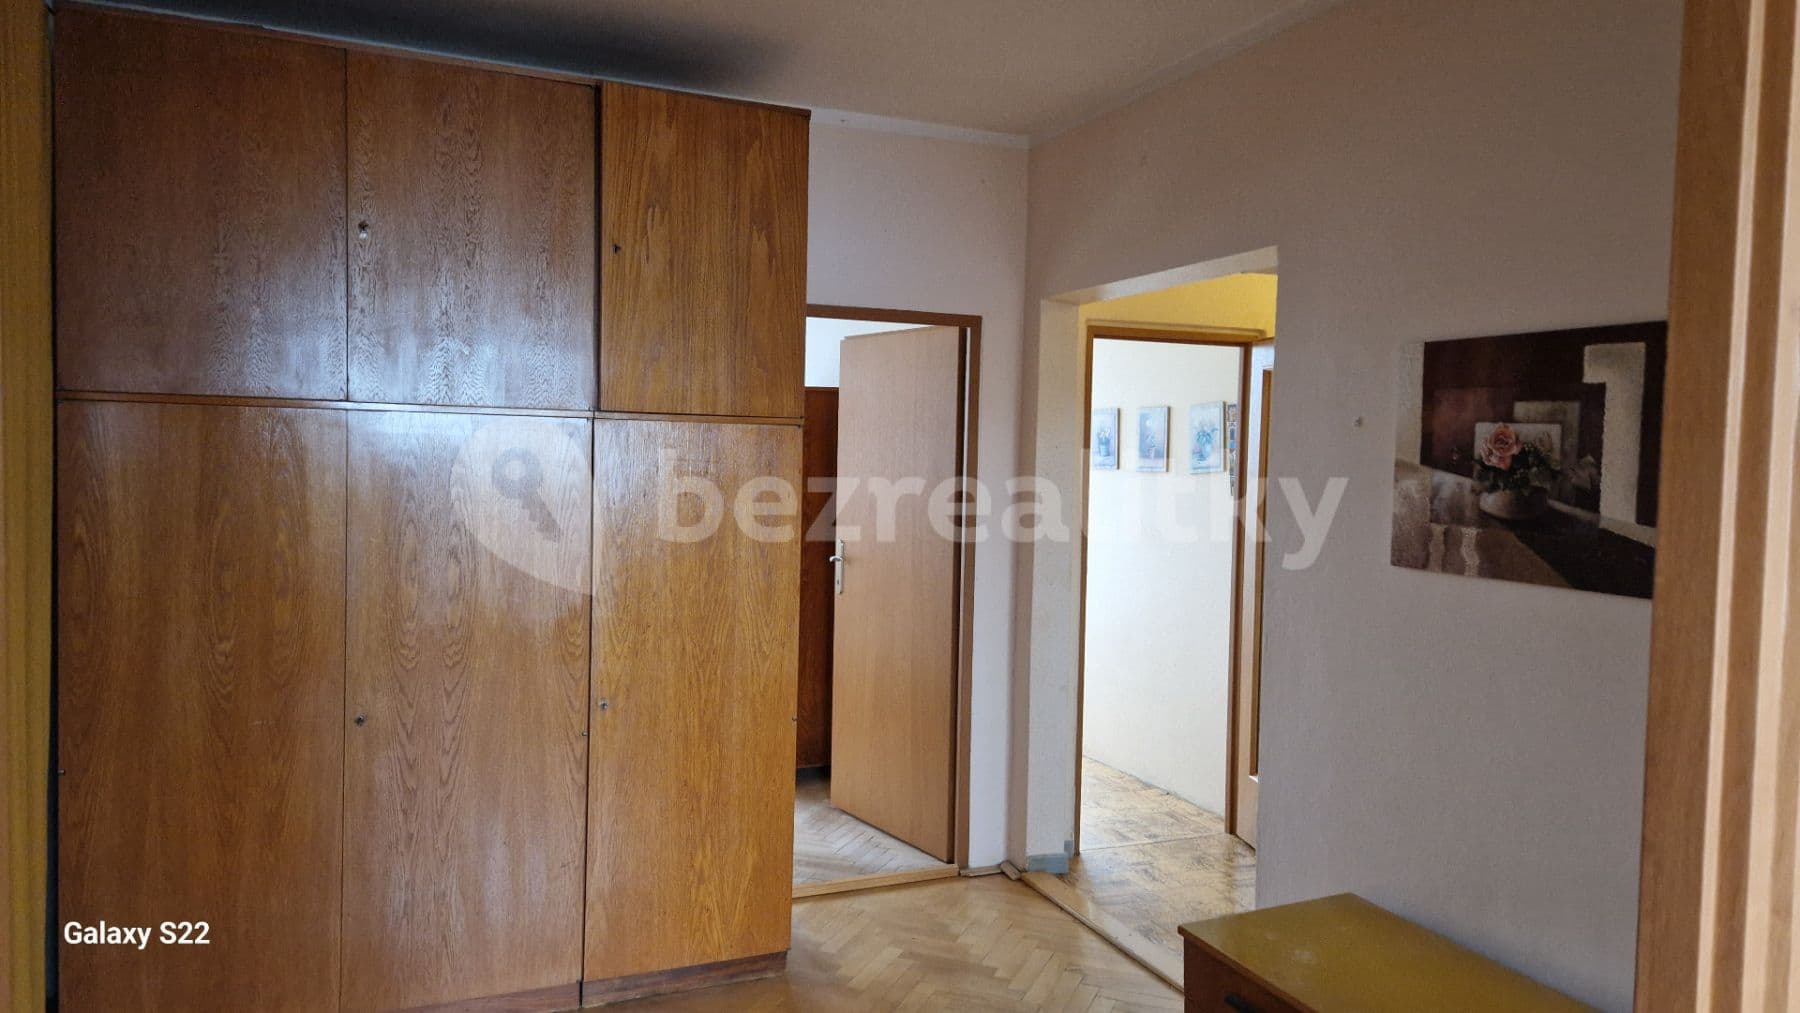 Predaj bytu 3-izbový 75 m², Haškova, Brno, Jihomoravský kraj